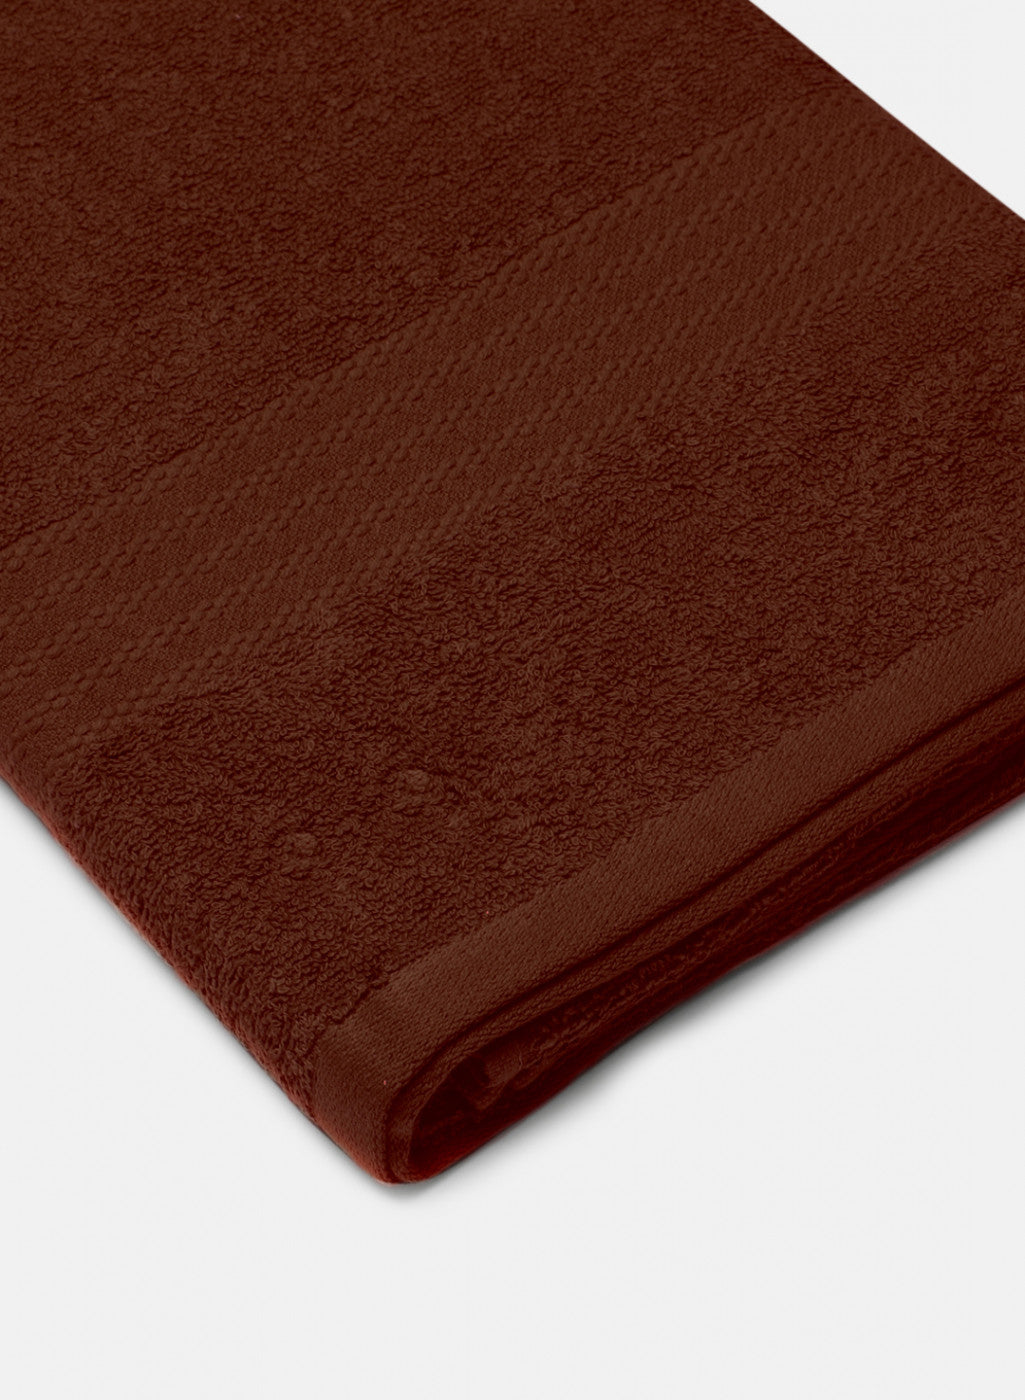 Brown Cotton 400 GSM Bath Towel